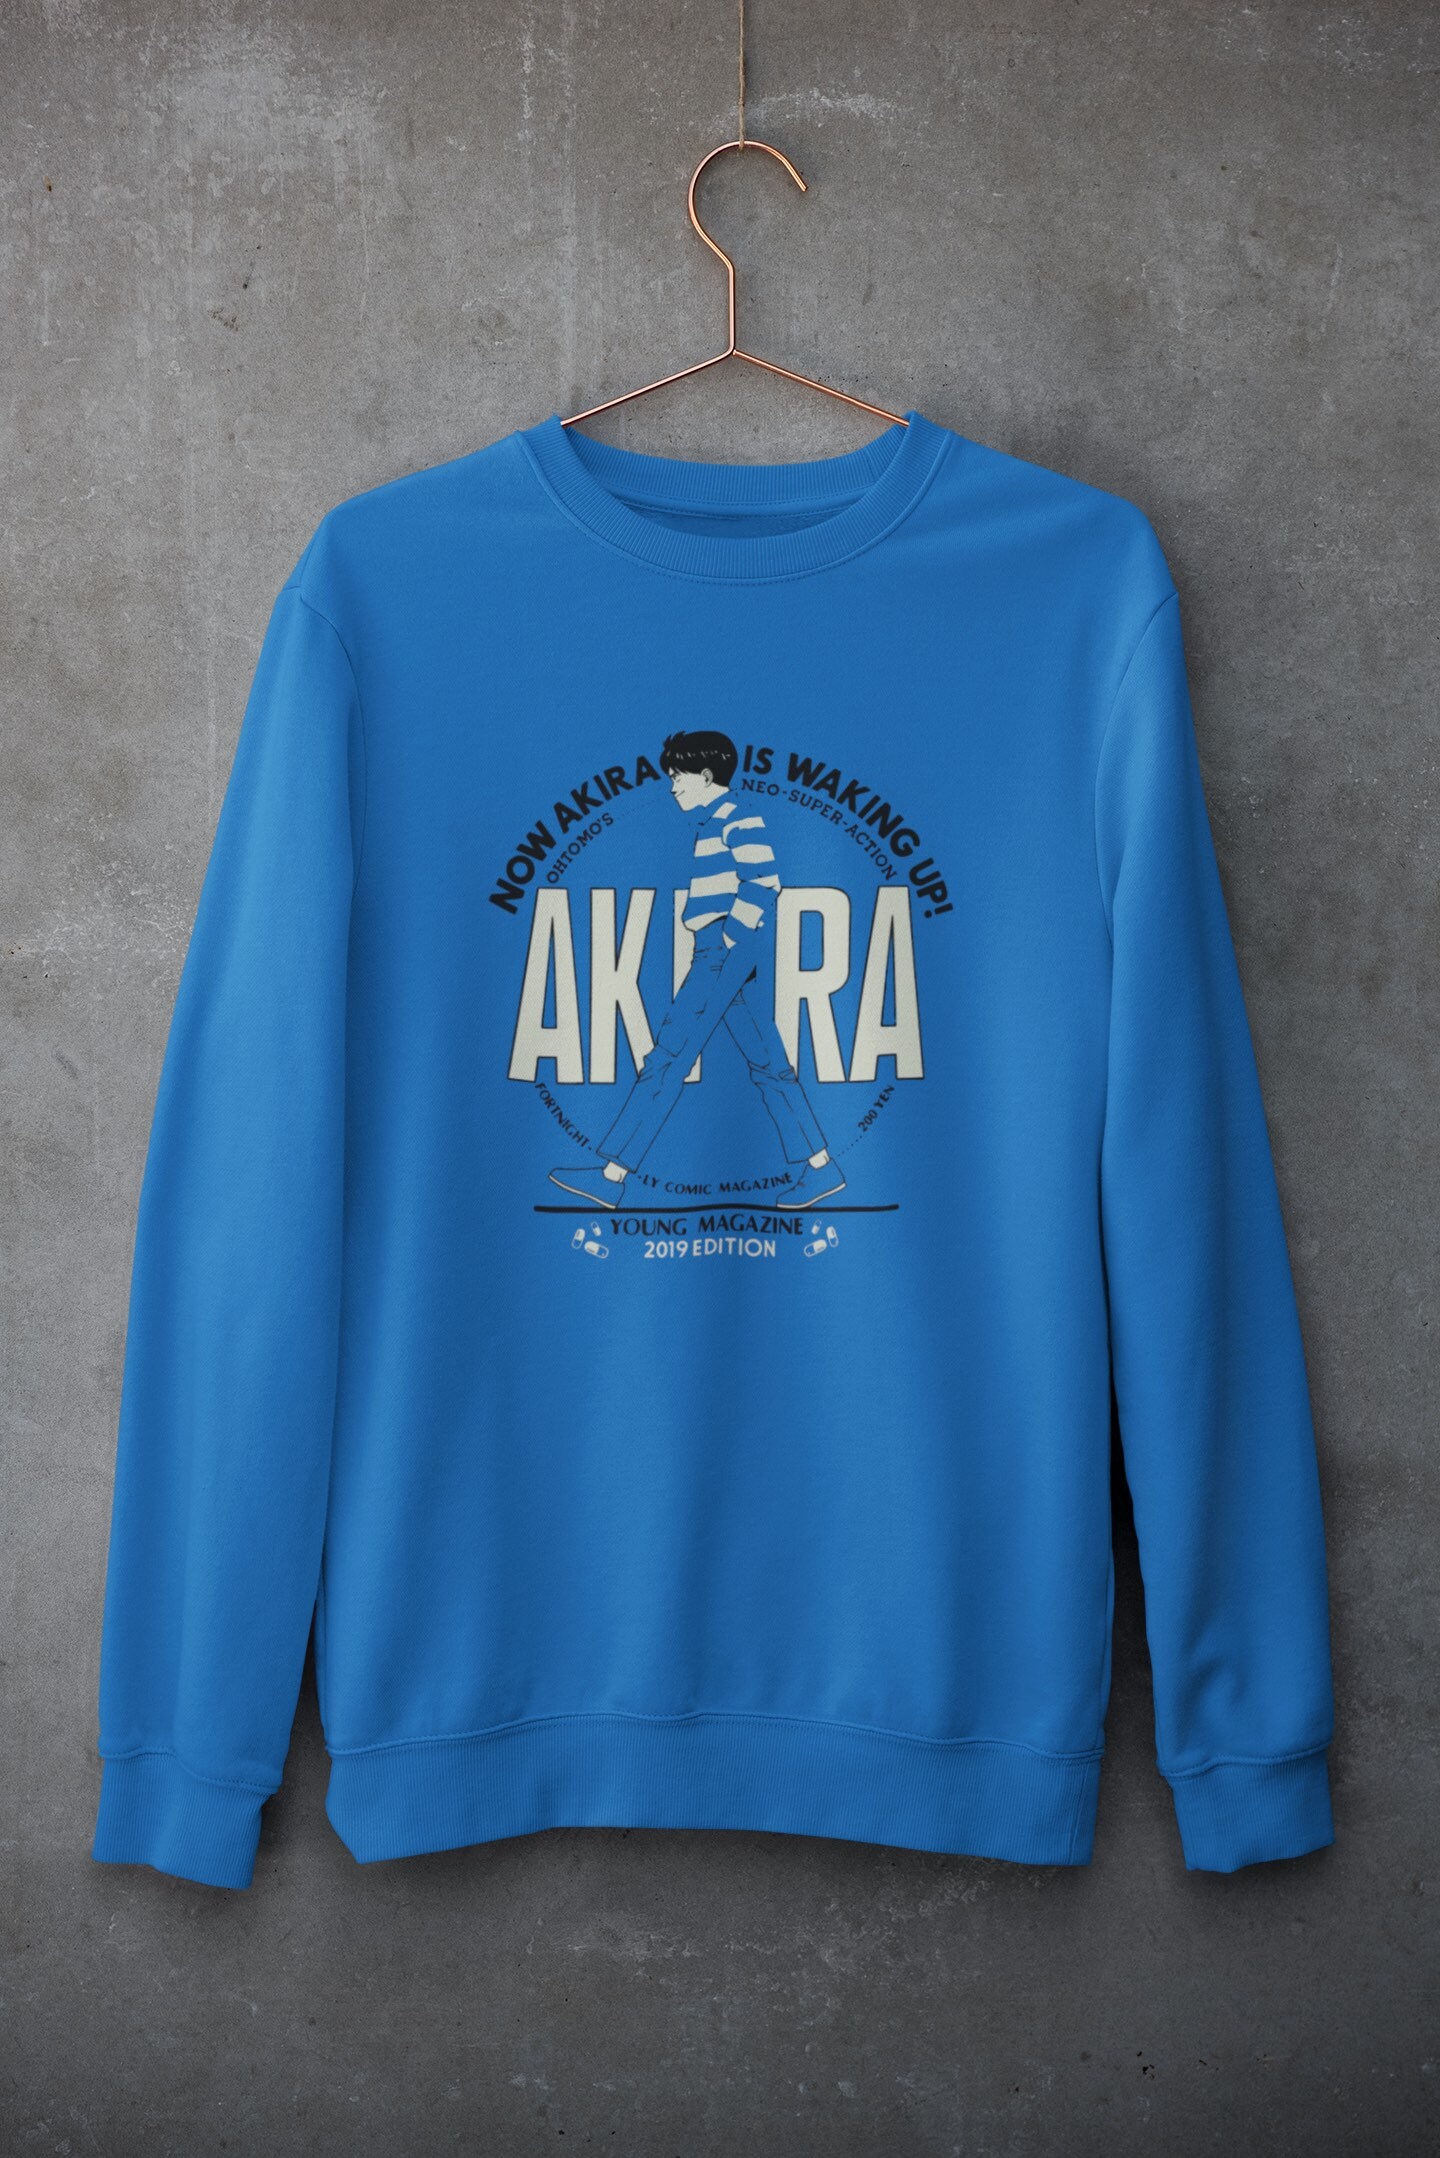 Anya Akira Anime Meme shirt, hoodie, sweater, long sleeve and tank top